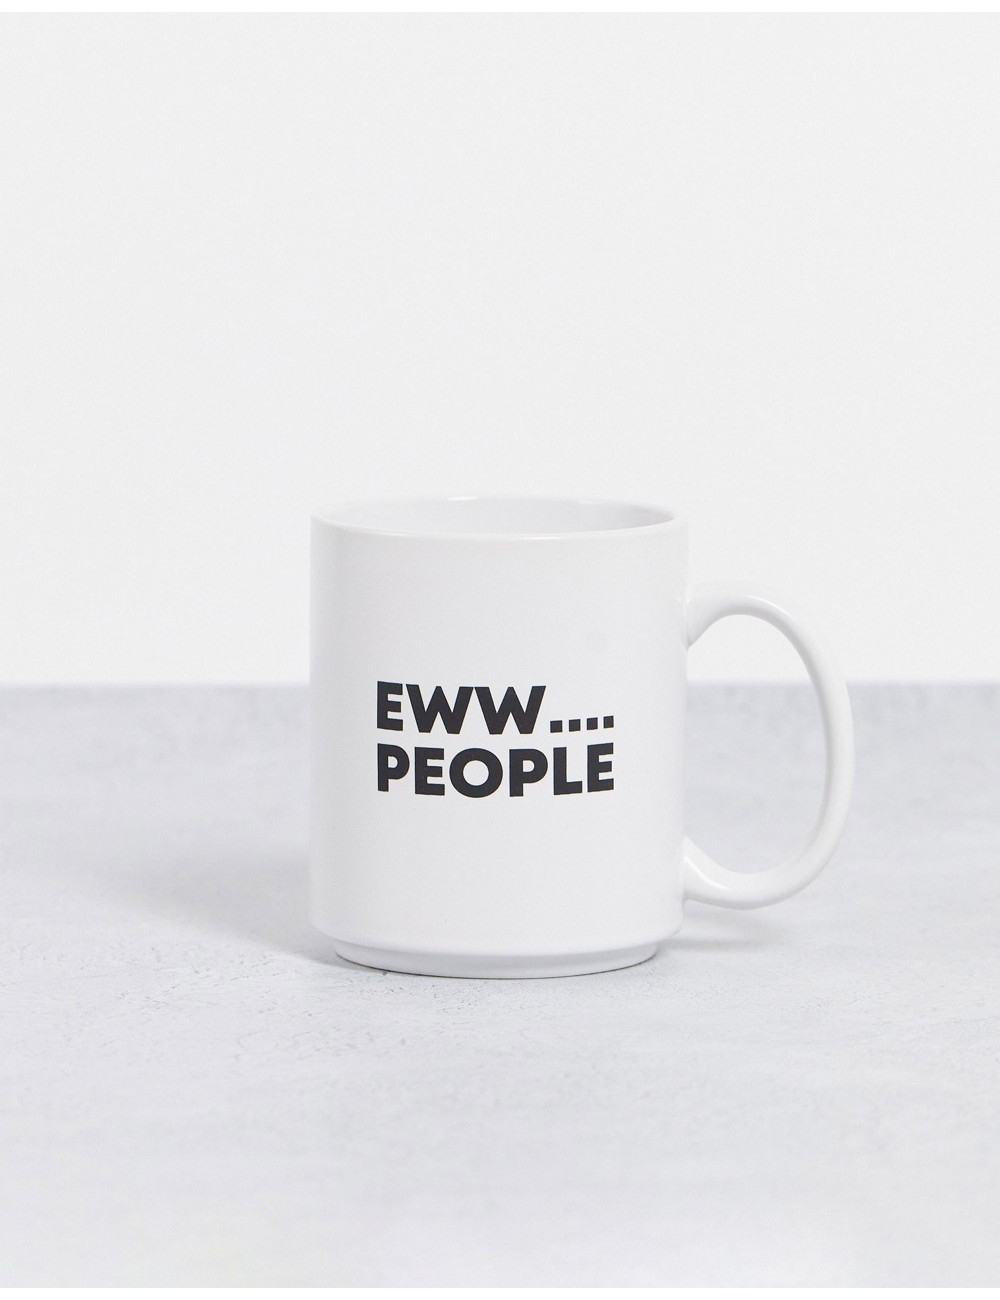 Typo mug with eww people...